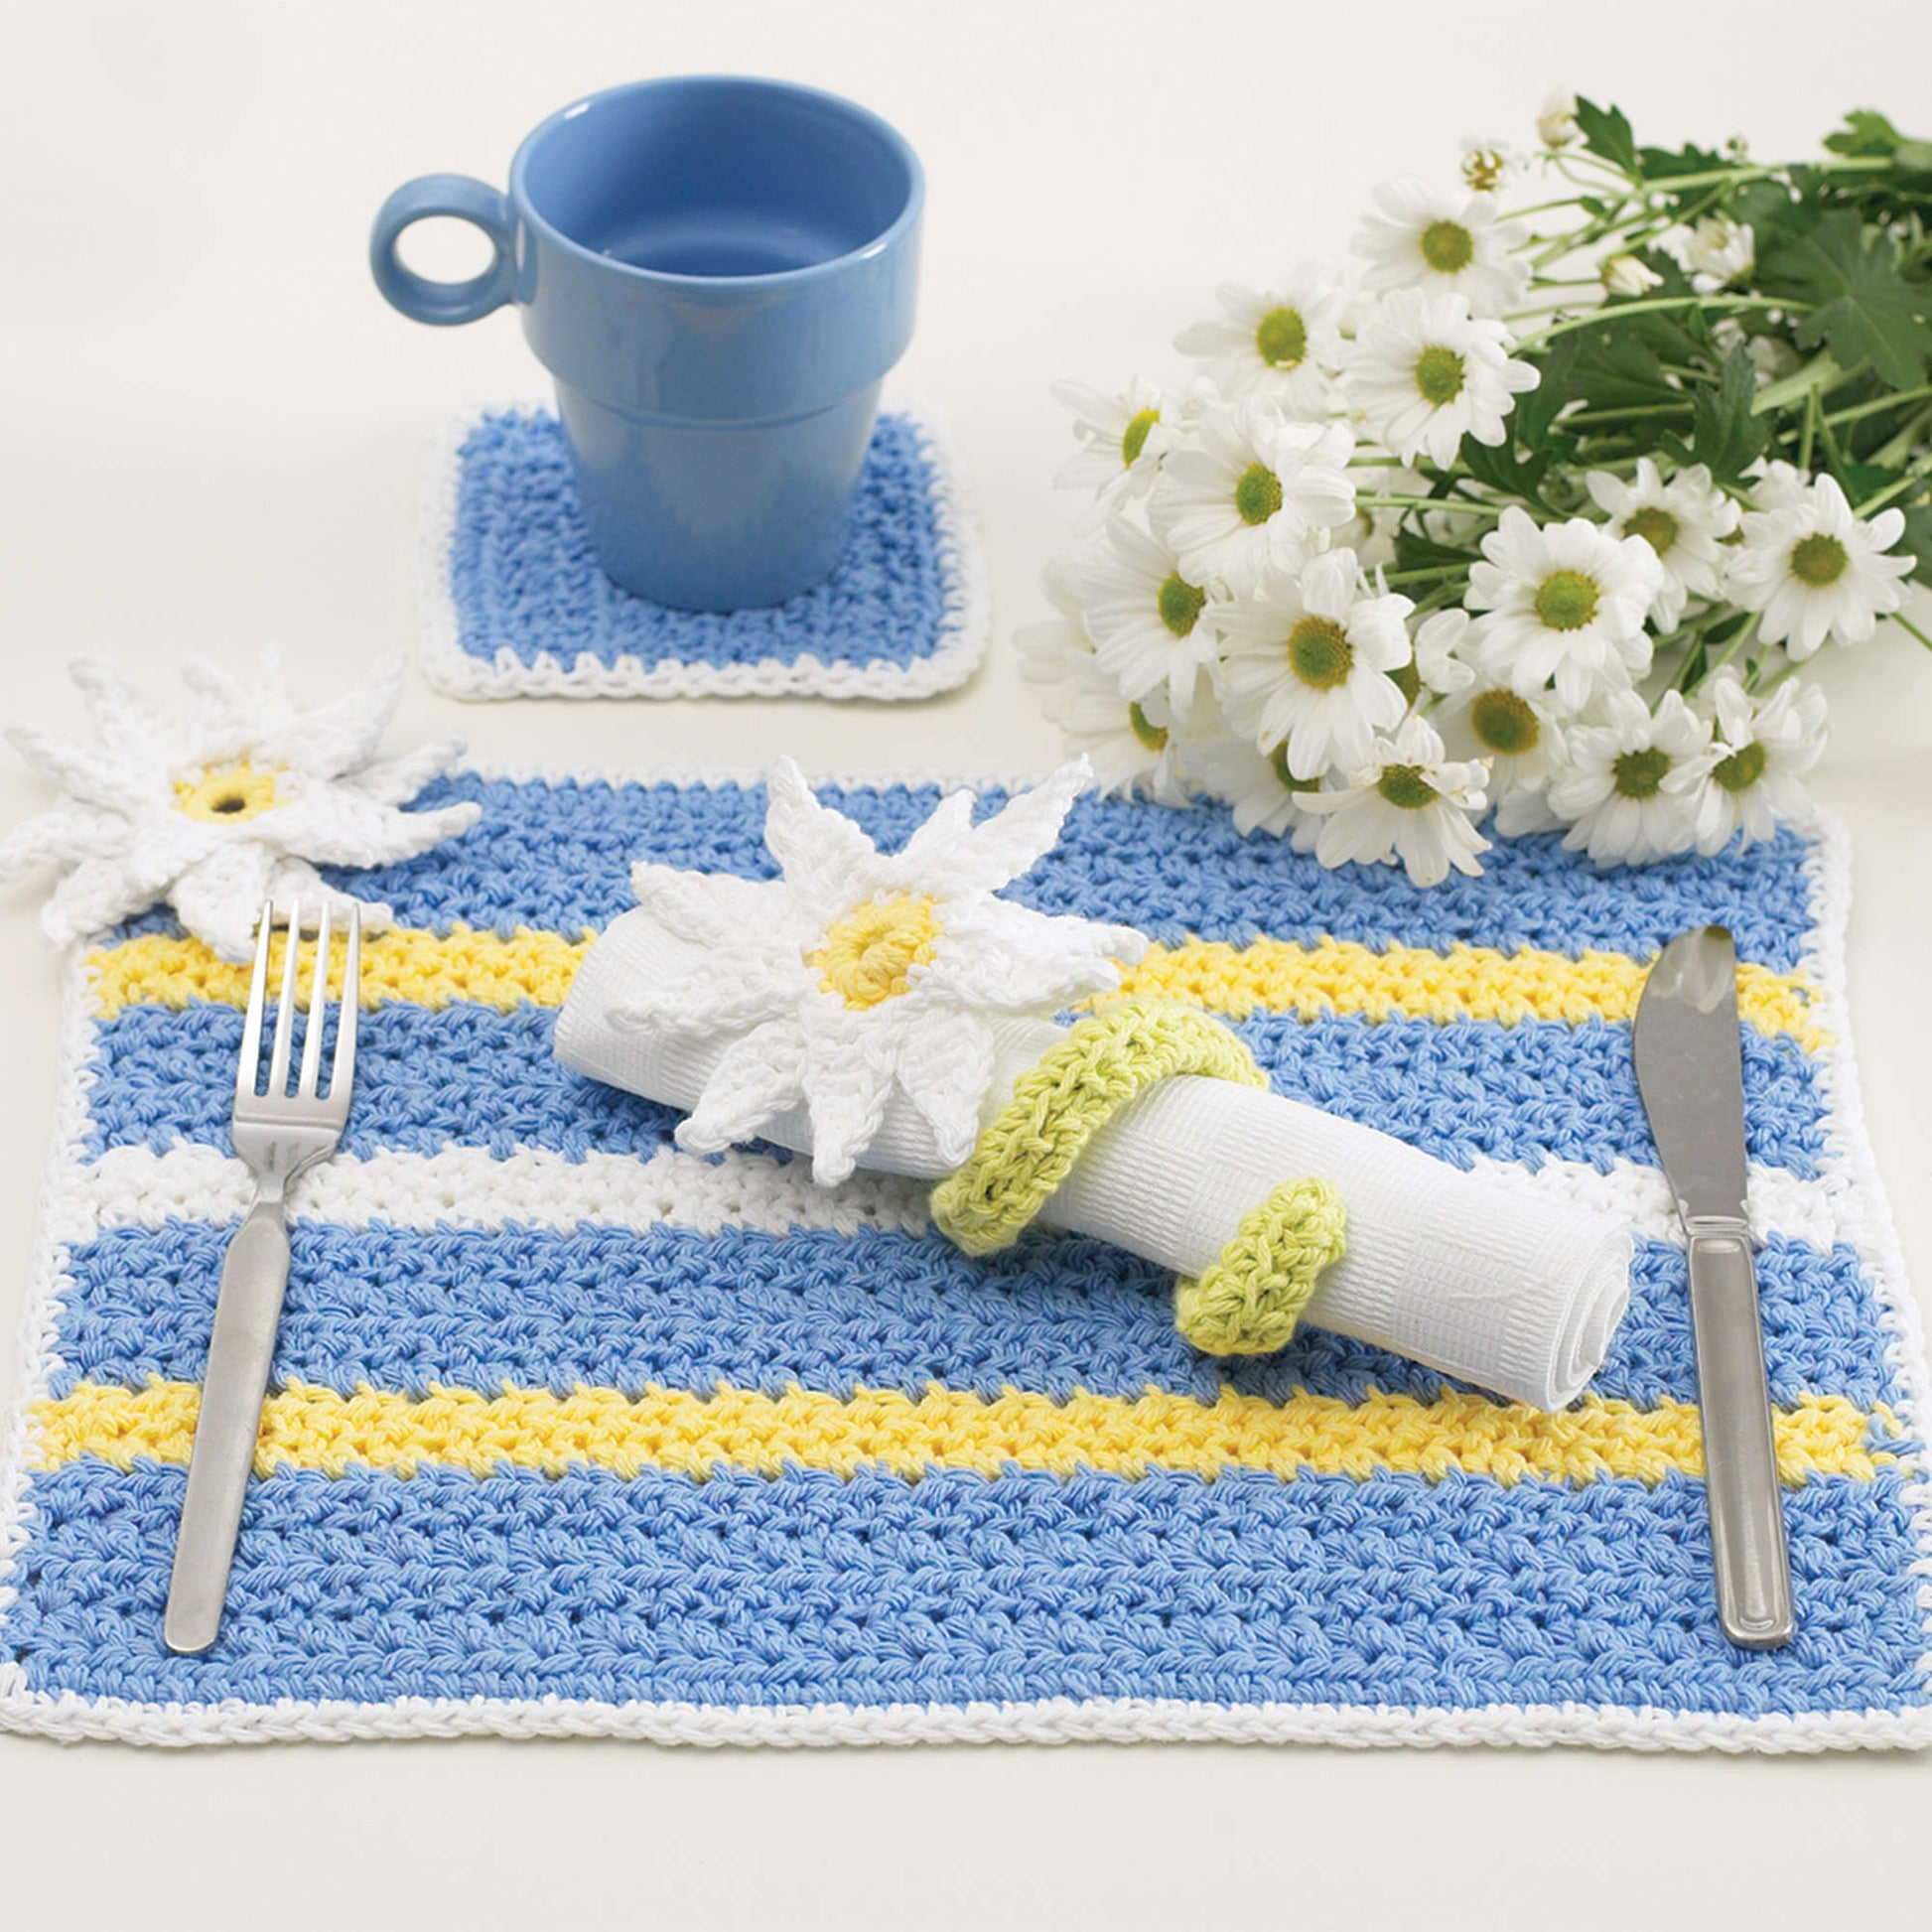 Free Lily Sugar'n Cream Daisy Table Setting Crochet Pattern